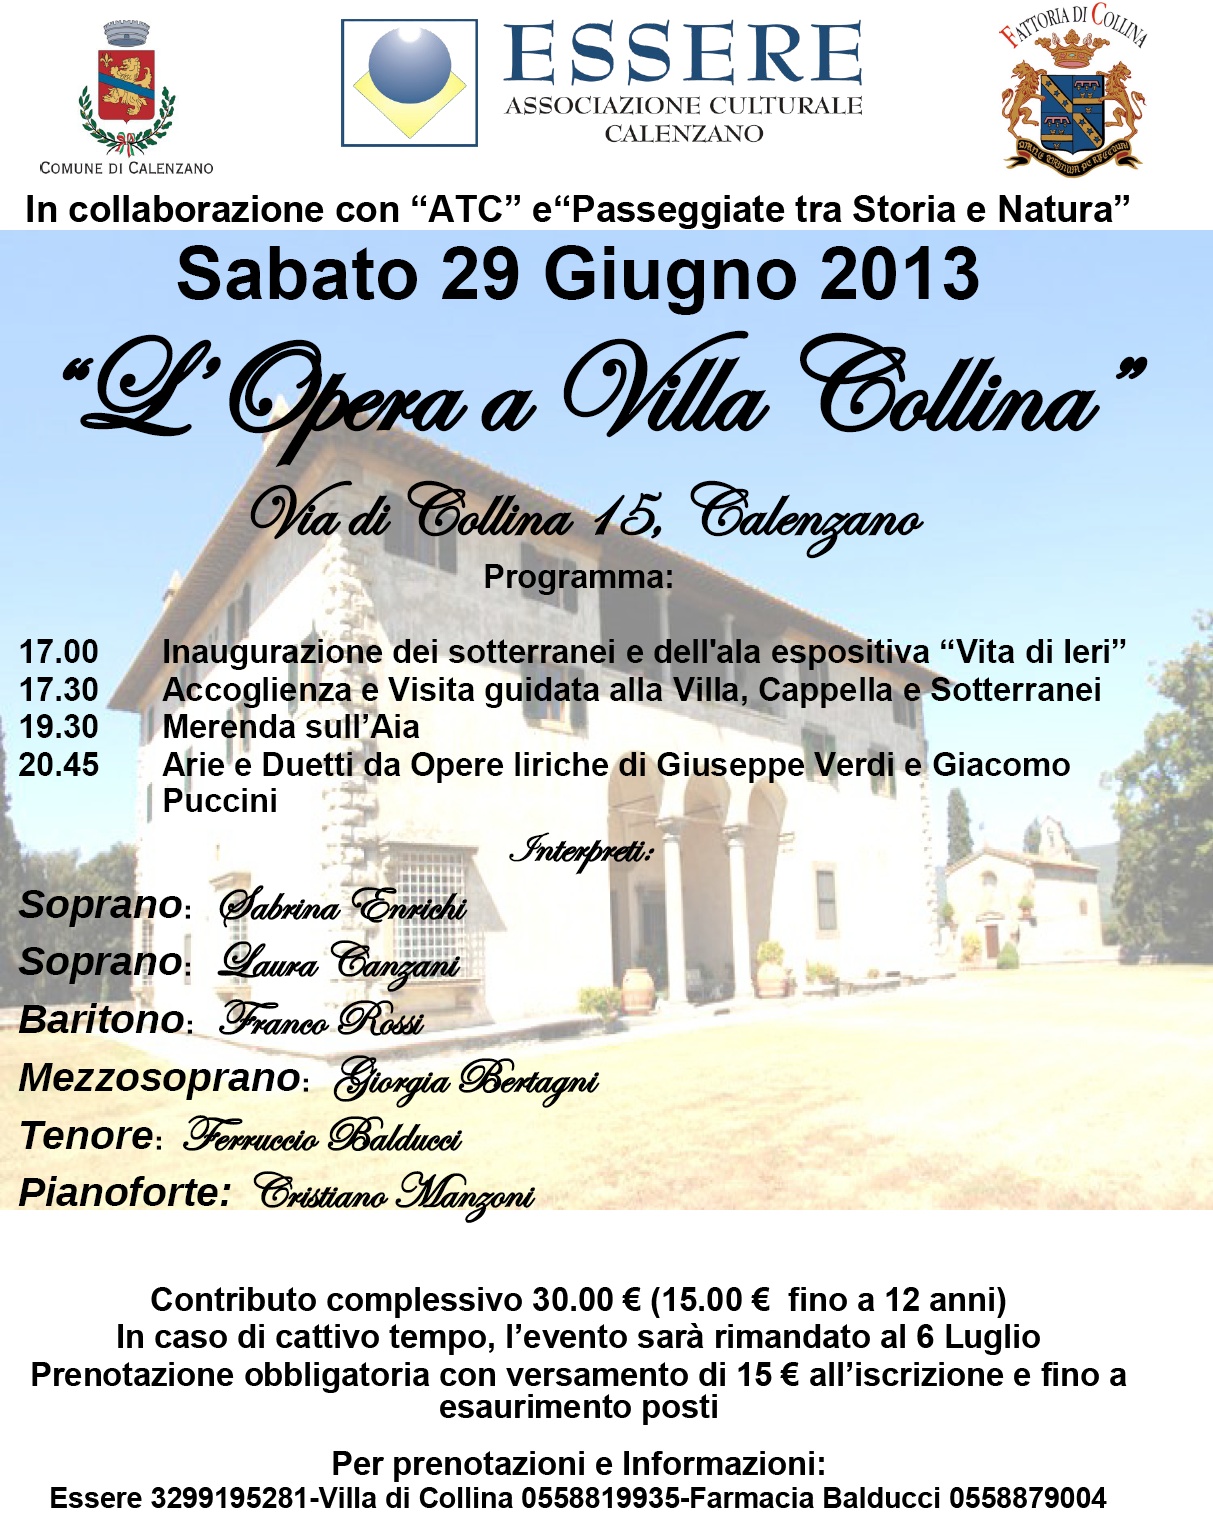 L'Opera a Villa Collina